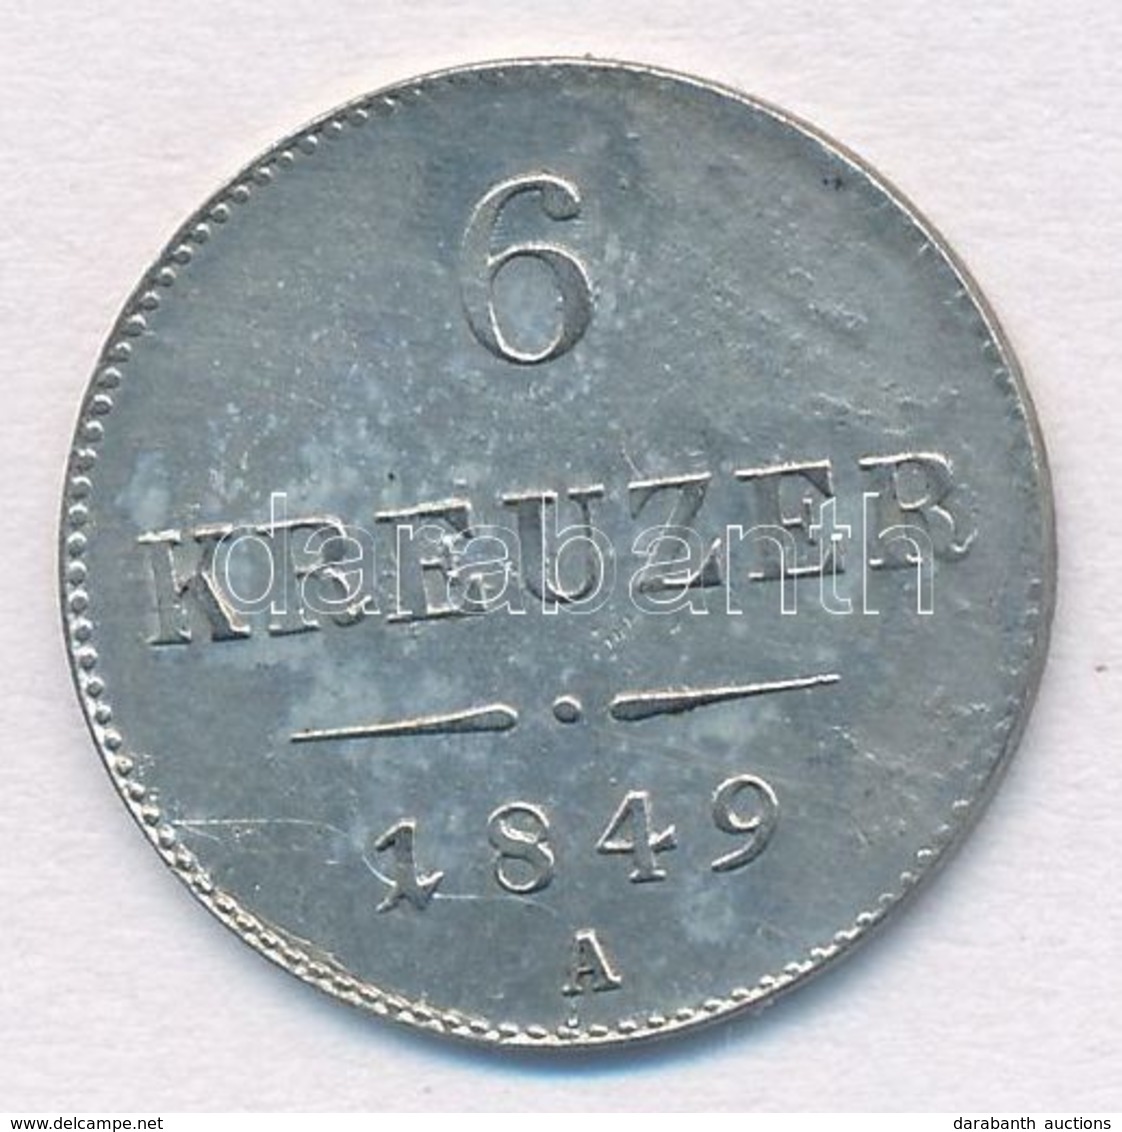 Ausztria 1849A 6kr Ag T:2 Lapkahiba
Austria 1849A 6 Kreuzer Ag C:XF Planchet Error
Krause KM#2200 - Unclassified